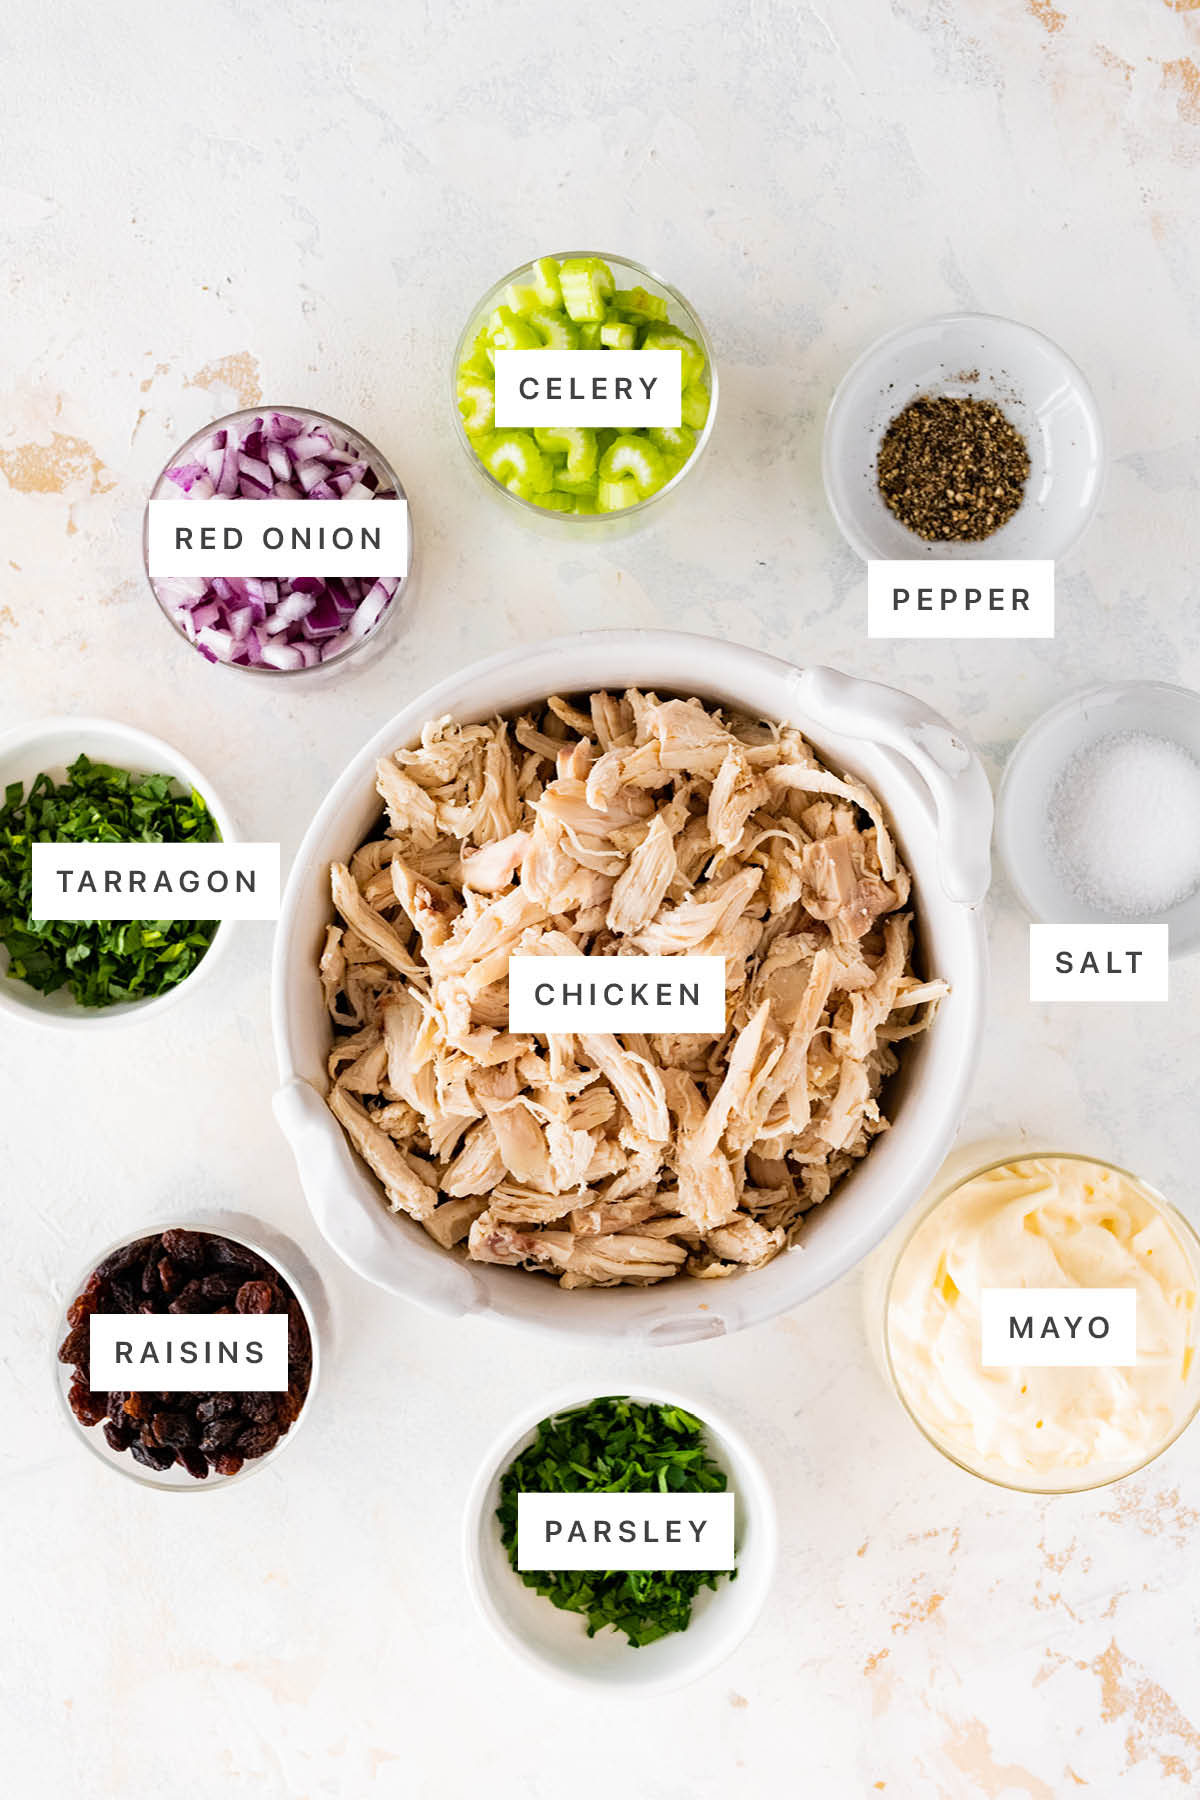 Ingredients measured out to make Tarragon Chicken Salad: red onion, celery, pepper, tarragon, chicken, salt, raisins, parsley and mayo.